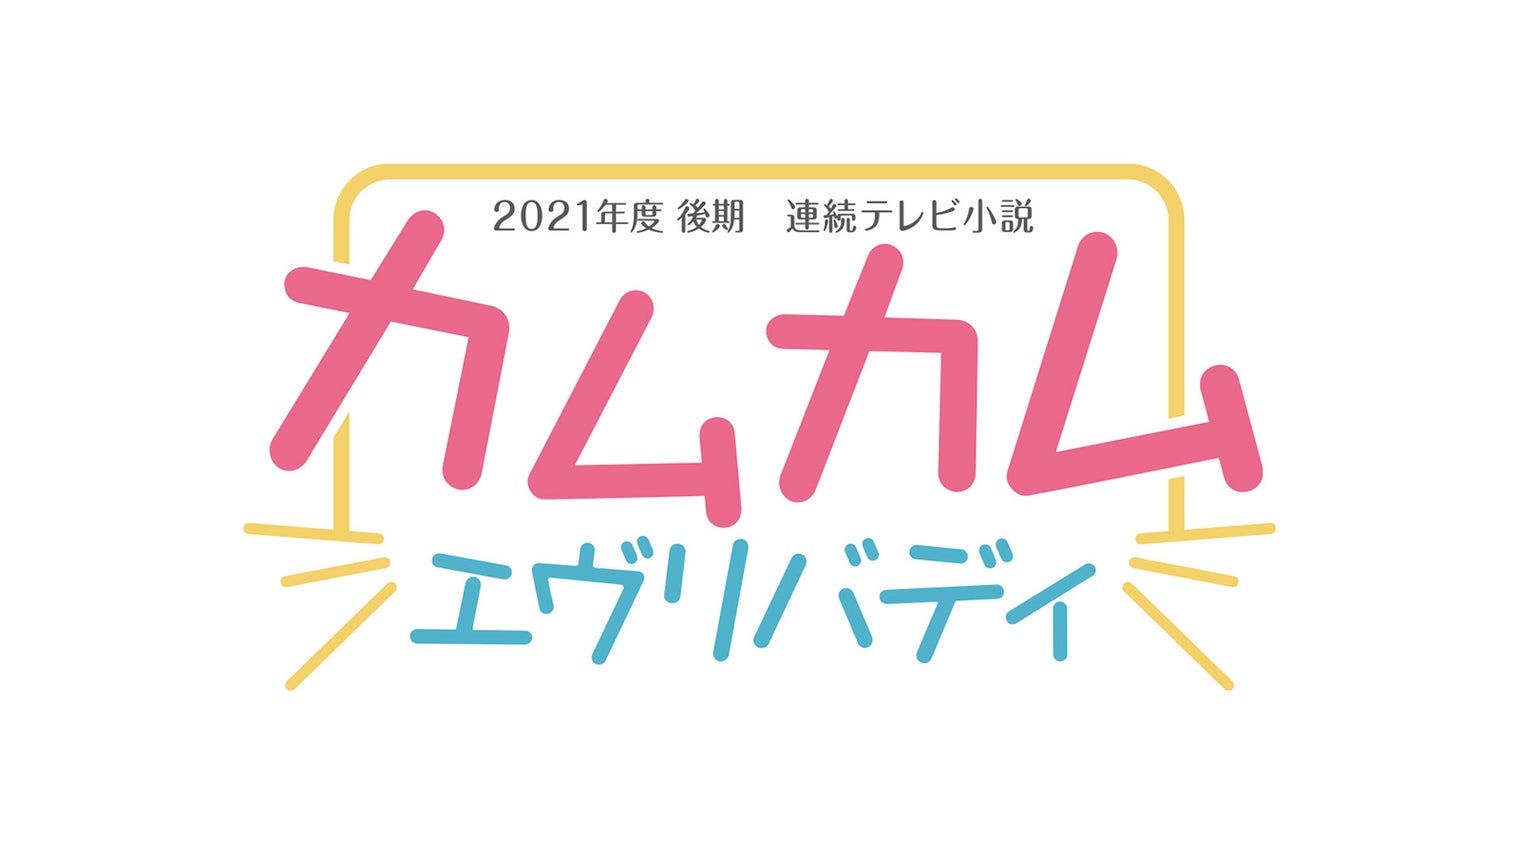 NHK朝ドラ史上初の3人ヒロイン　2021年後期「カムカムエヴリバディ」制作を発表